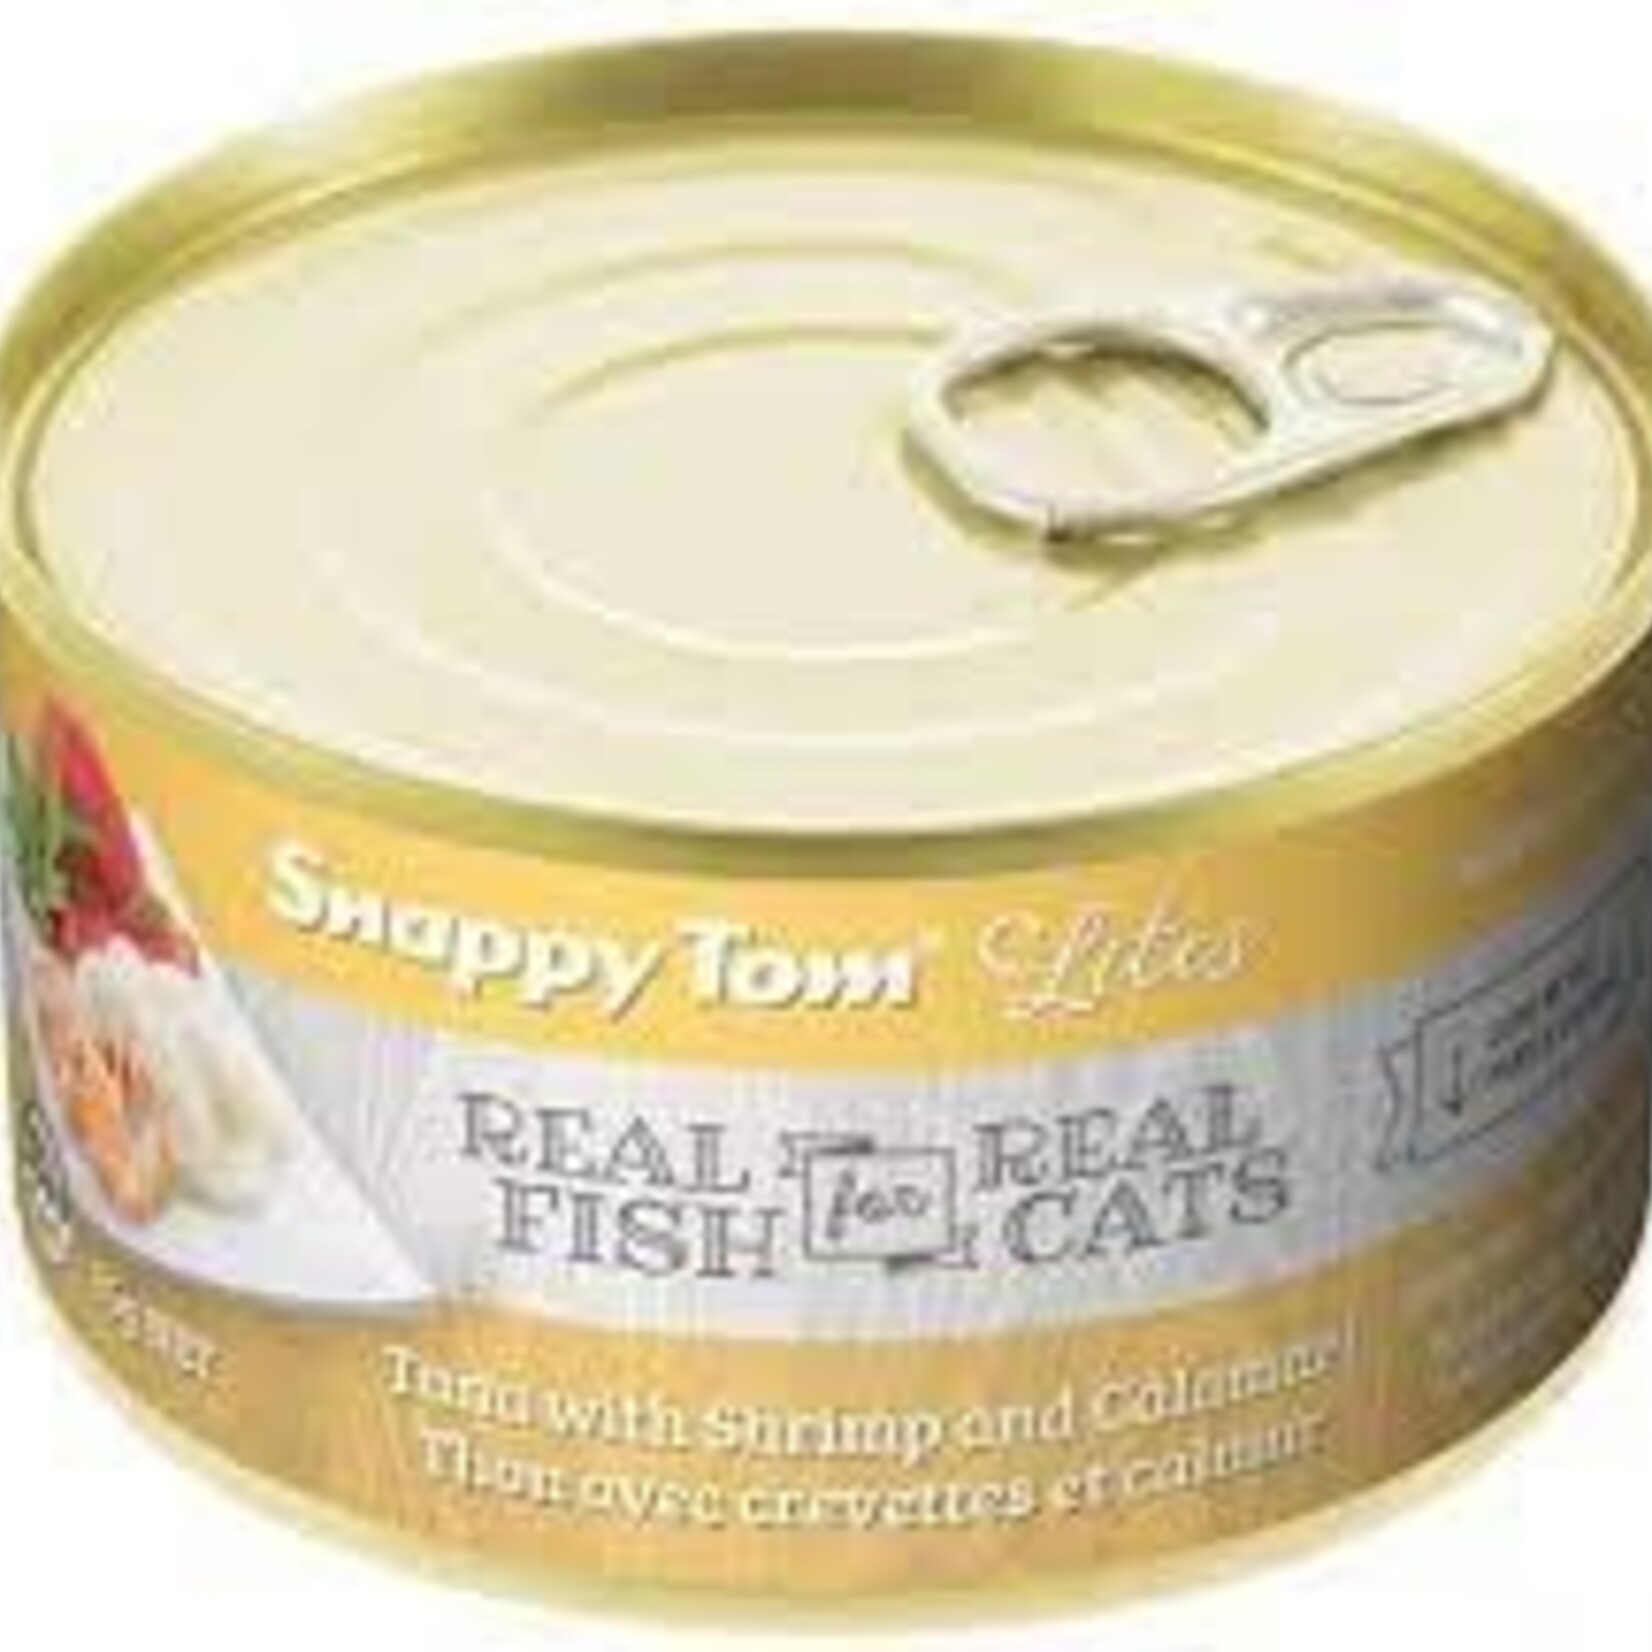 Snappy Tom Tuna with Shrimp & Calamari  (3 oz)